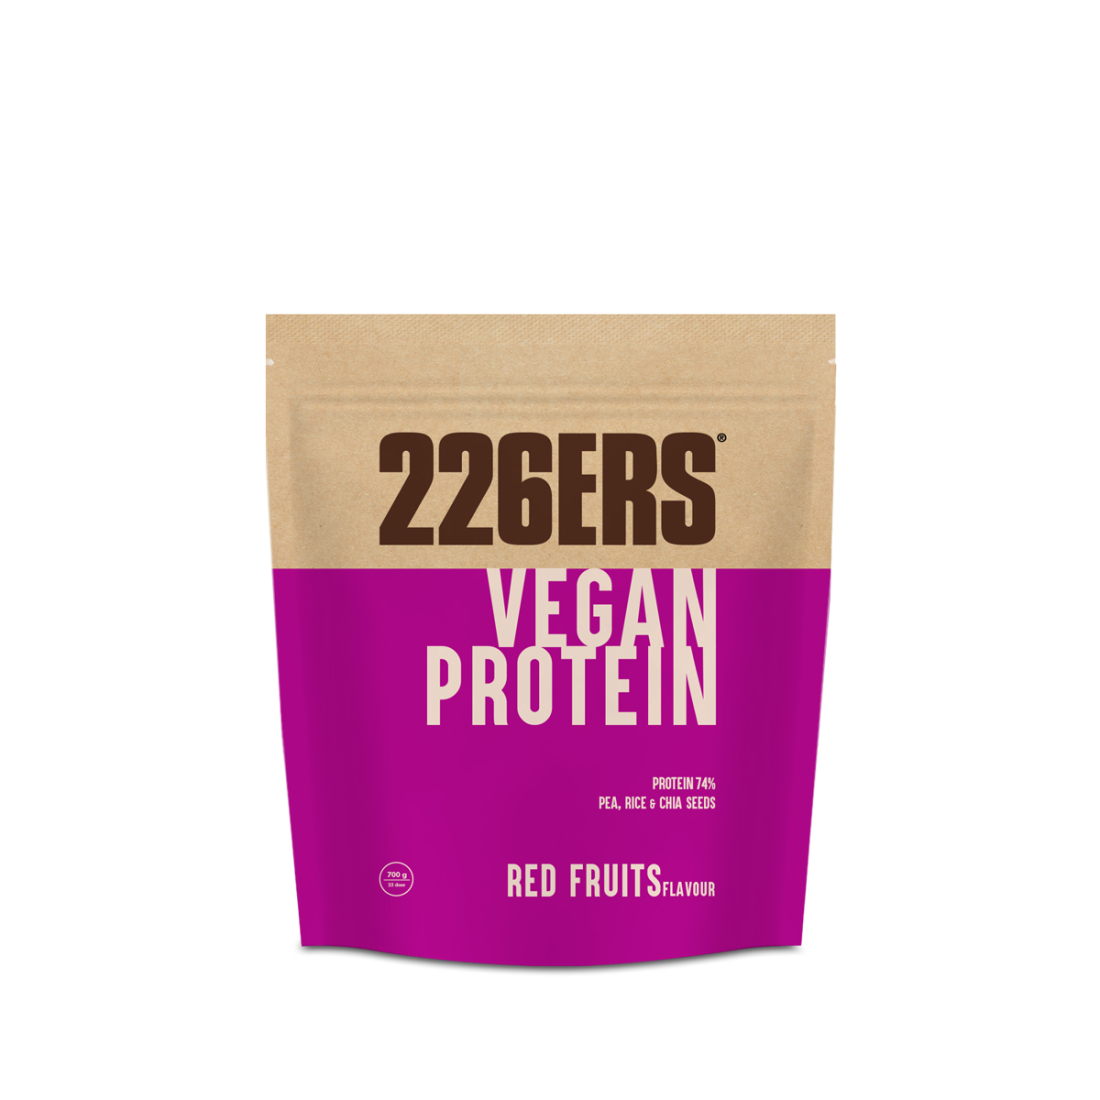 VEGAN PROTEIN 700 - Vegan Protein...